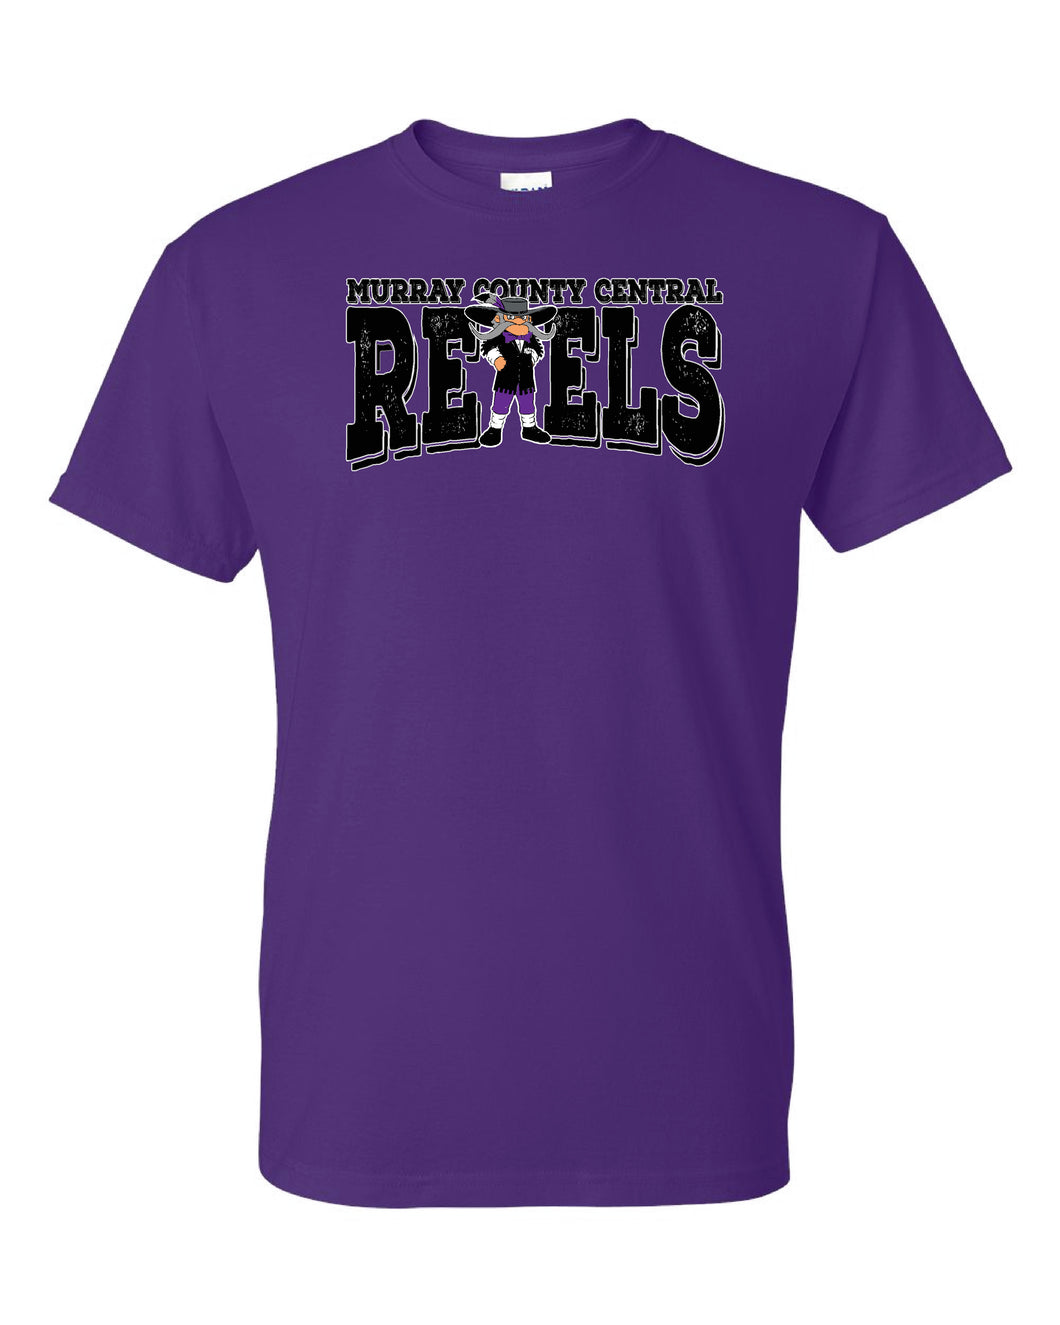 MCC Rebels Rudy Gildan Tshirt - Purple